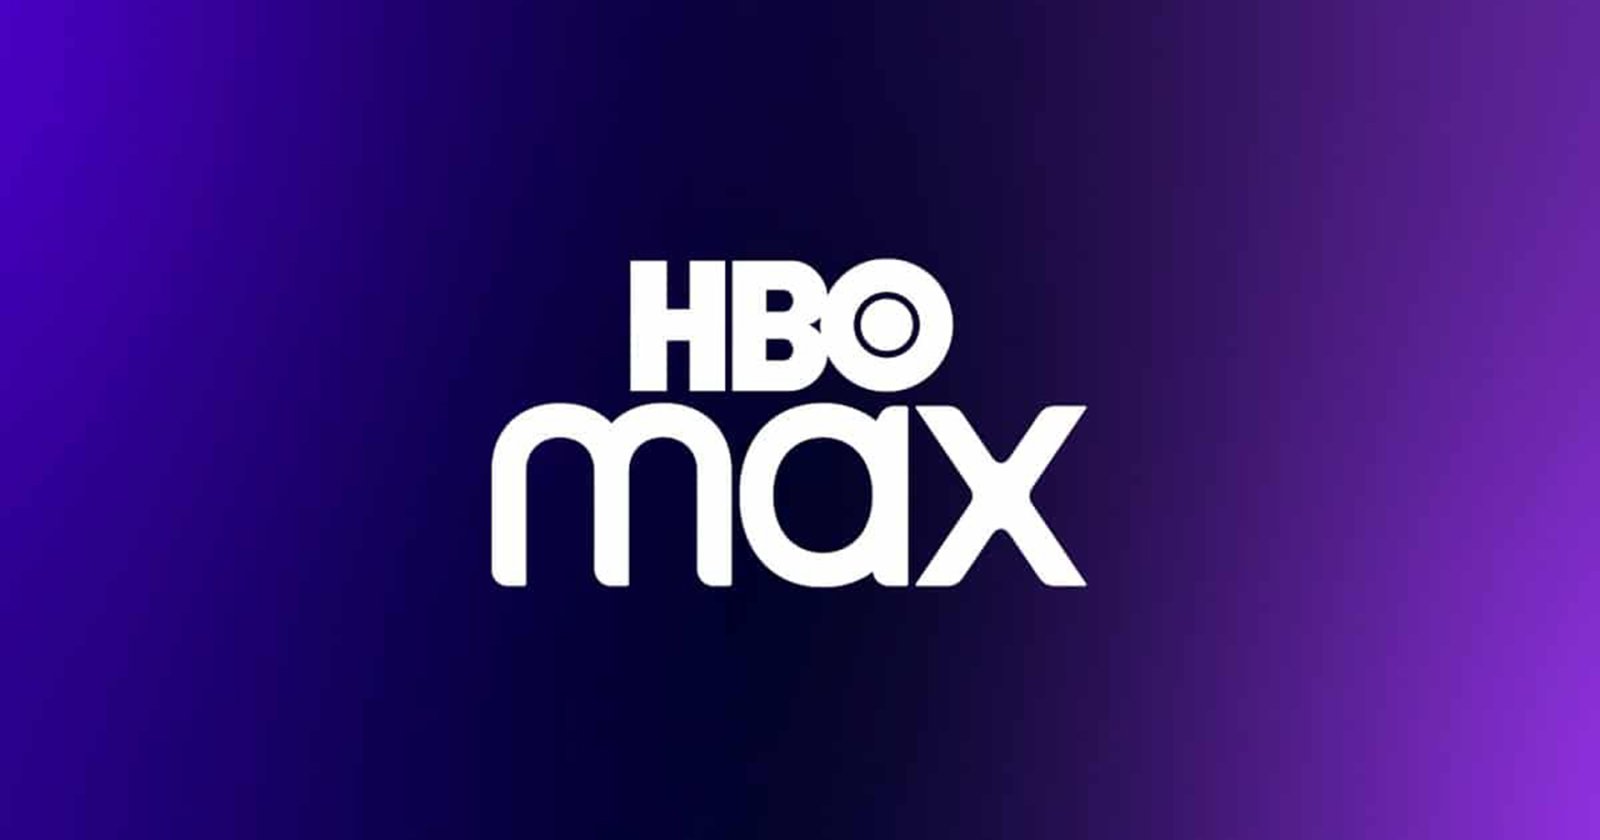 Warner Bros. สูญเสียผู้สมัคร HBO Max ไป 1.8 ล้านคน และสูญเงิน 1,240 ล้านเหรียญ